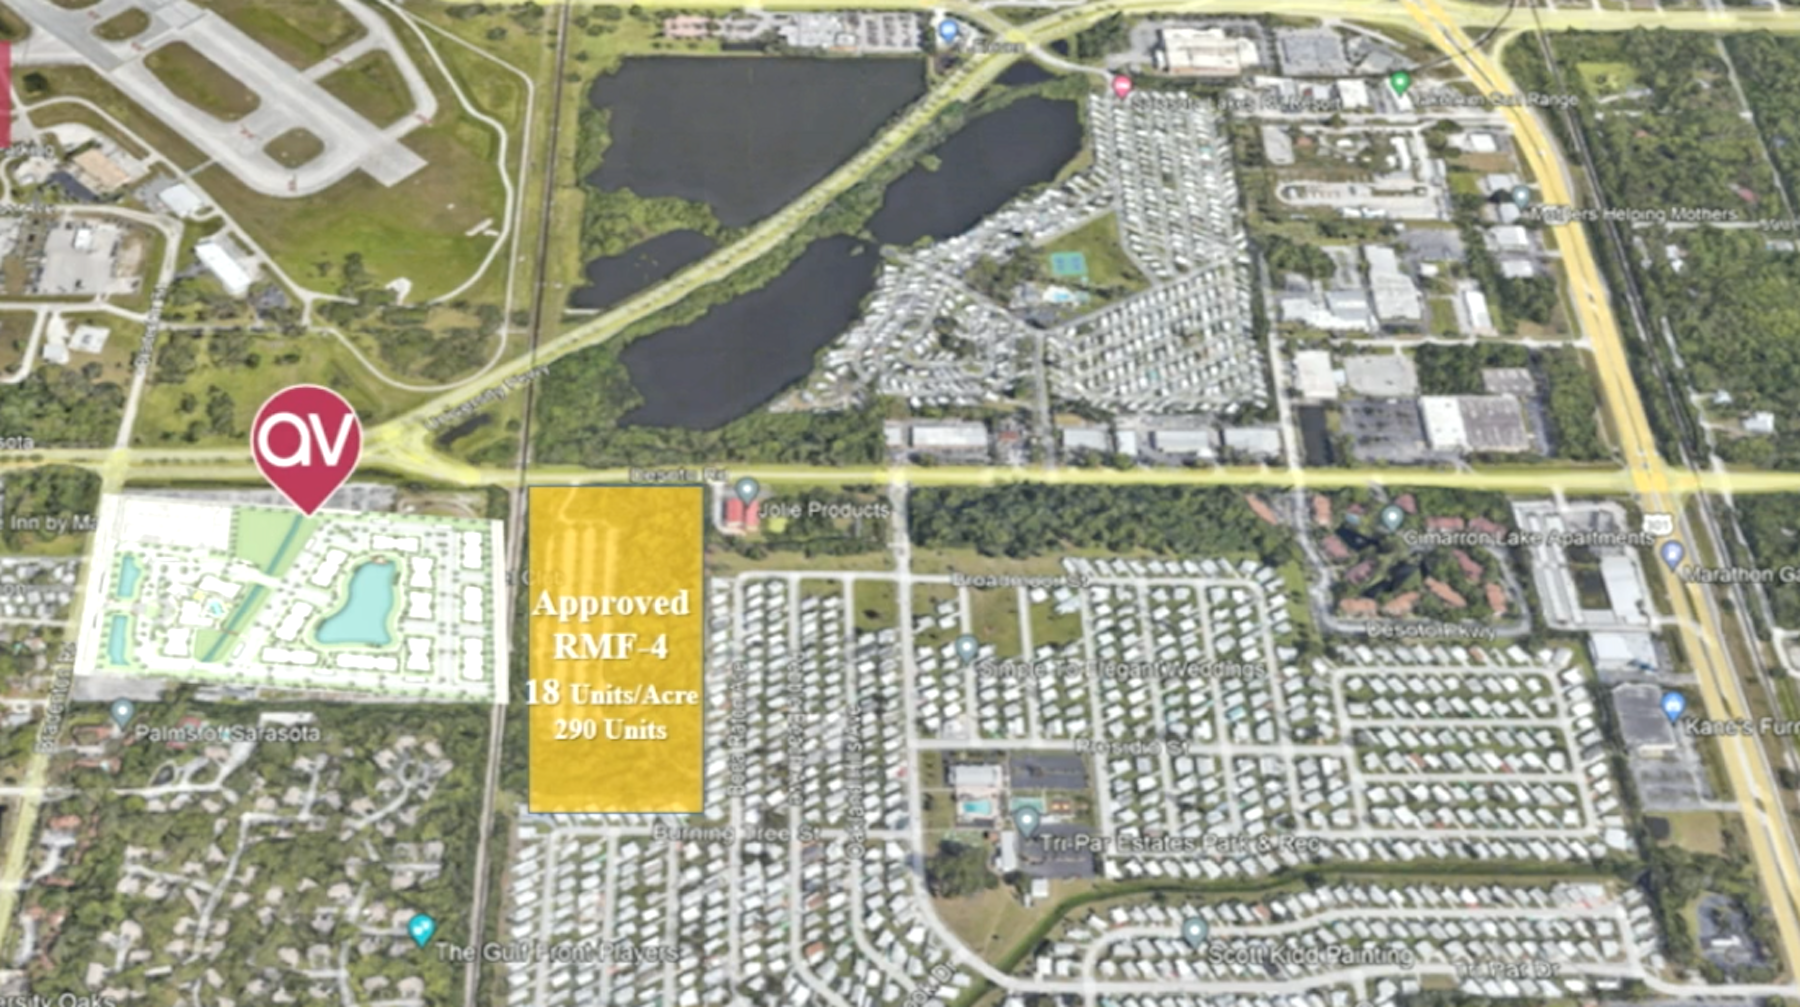 Aerial image shows the proximity of Aventon Sarasota, highlighted in white, to the Sarasota Bradenton International Airport runway. (Courtesy image)